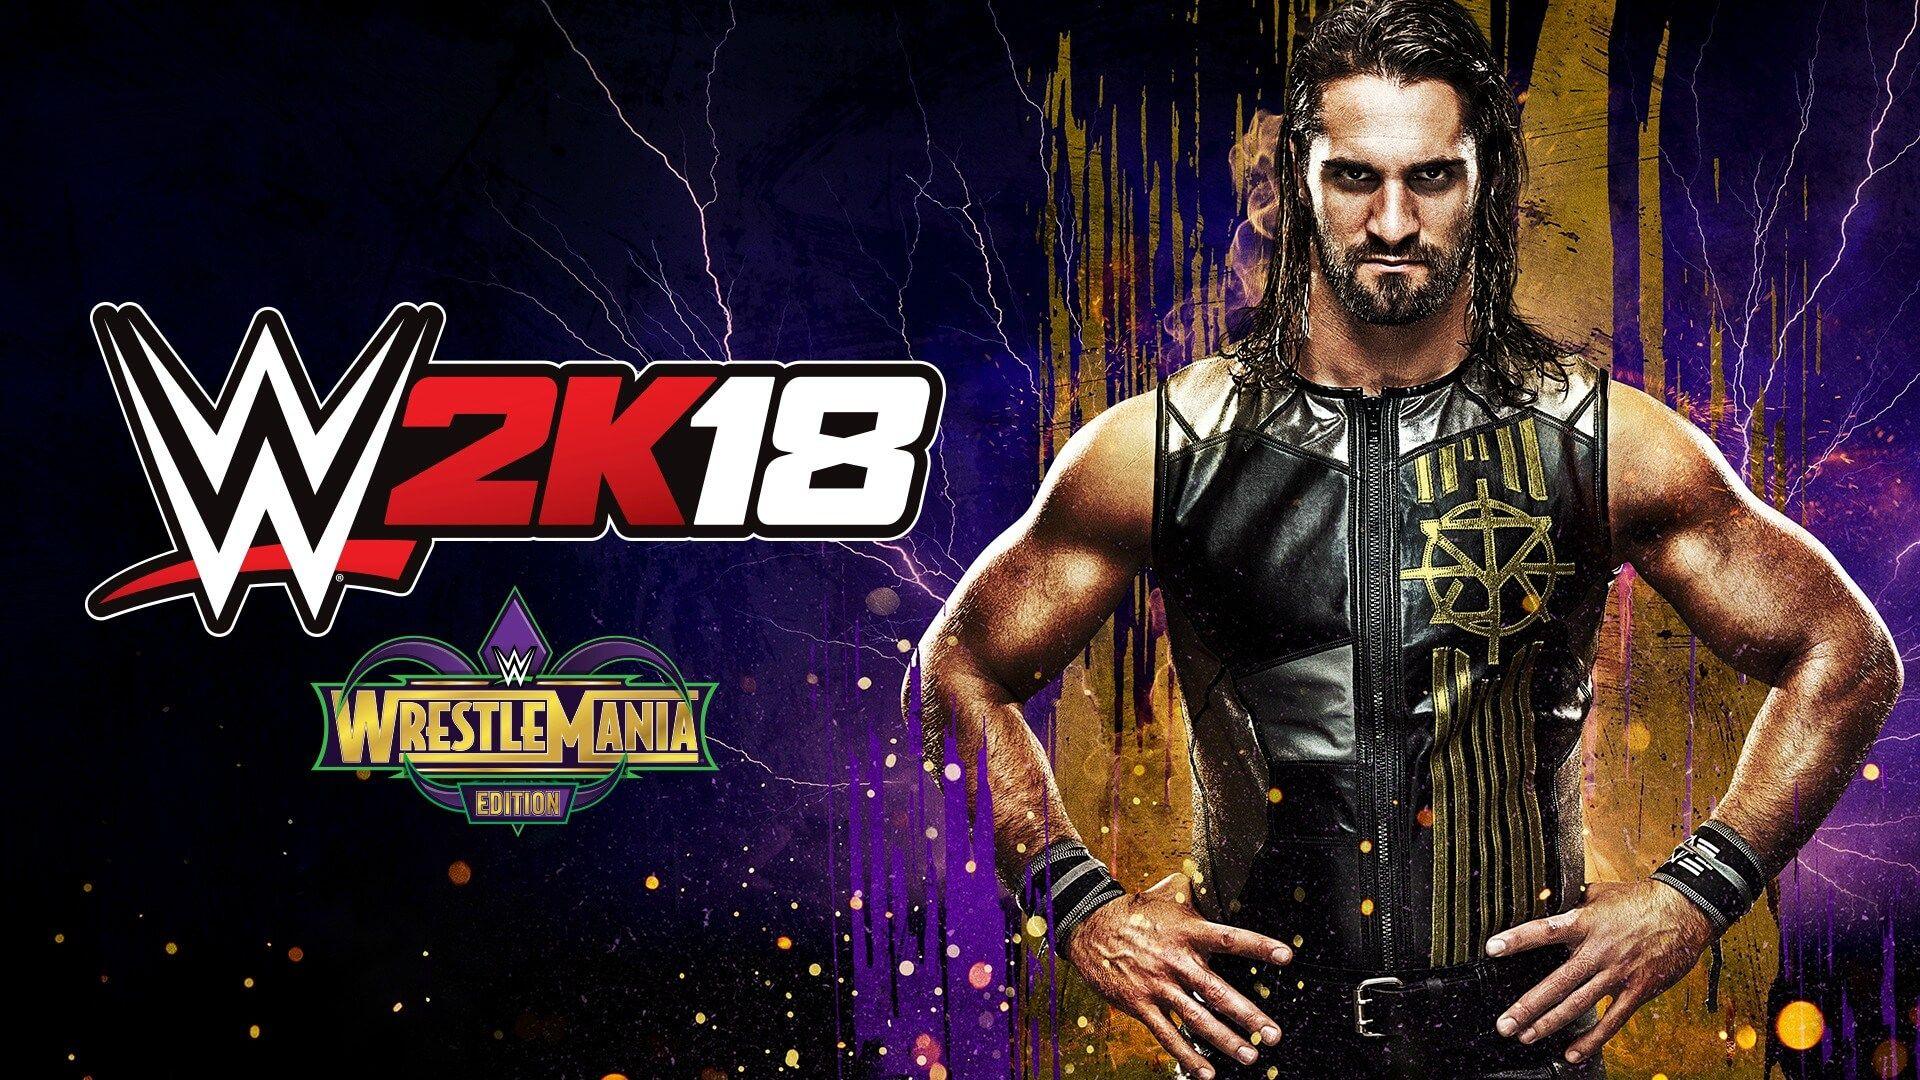 WWE 2K18: WrestleMania Edition Releasing Internationally on March